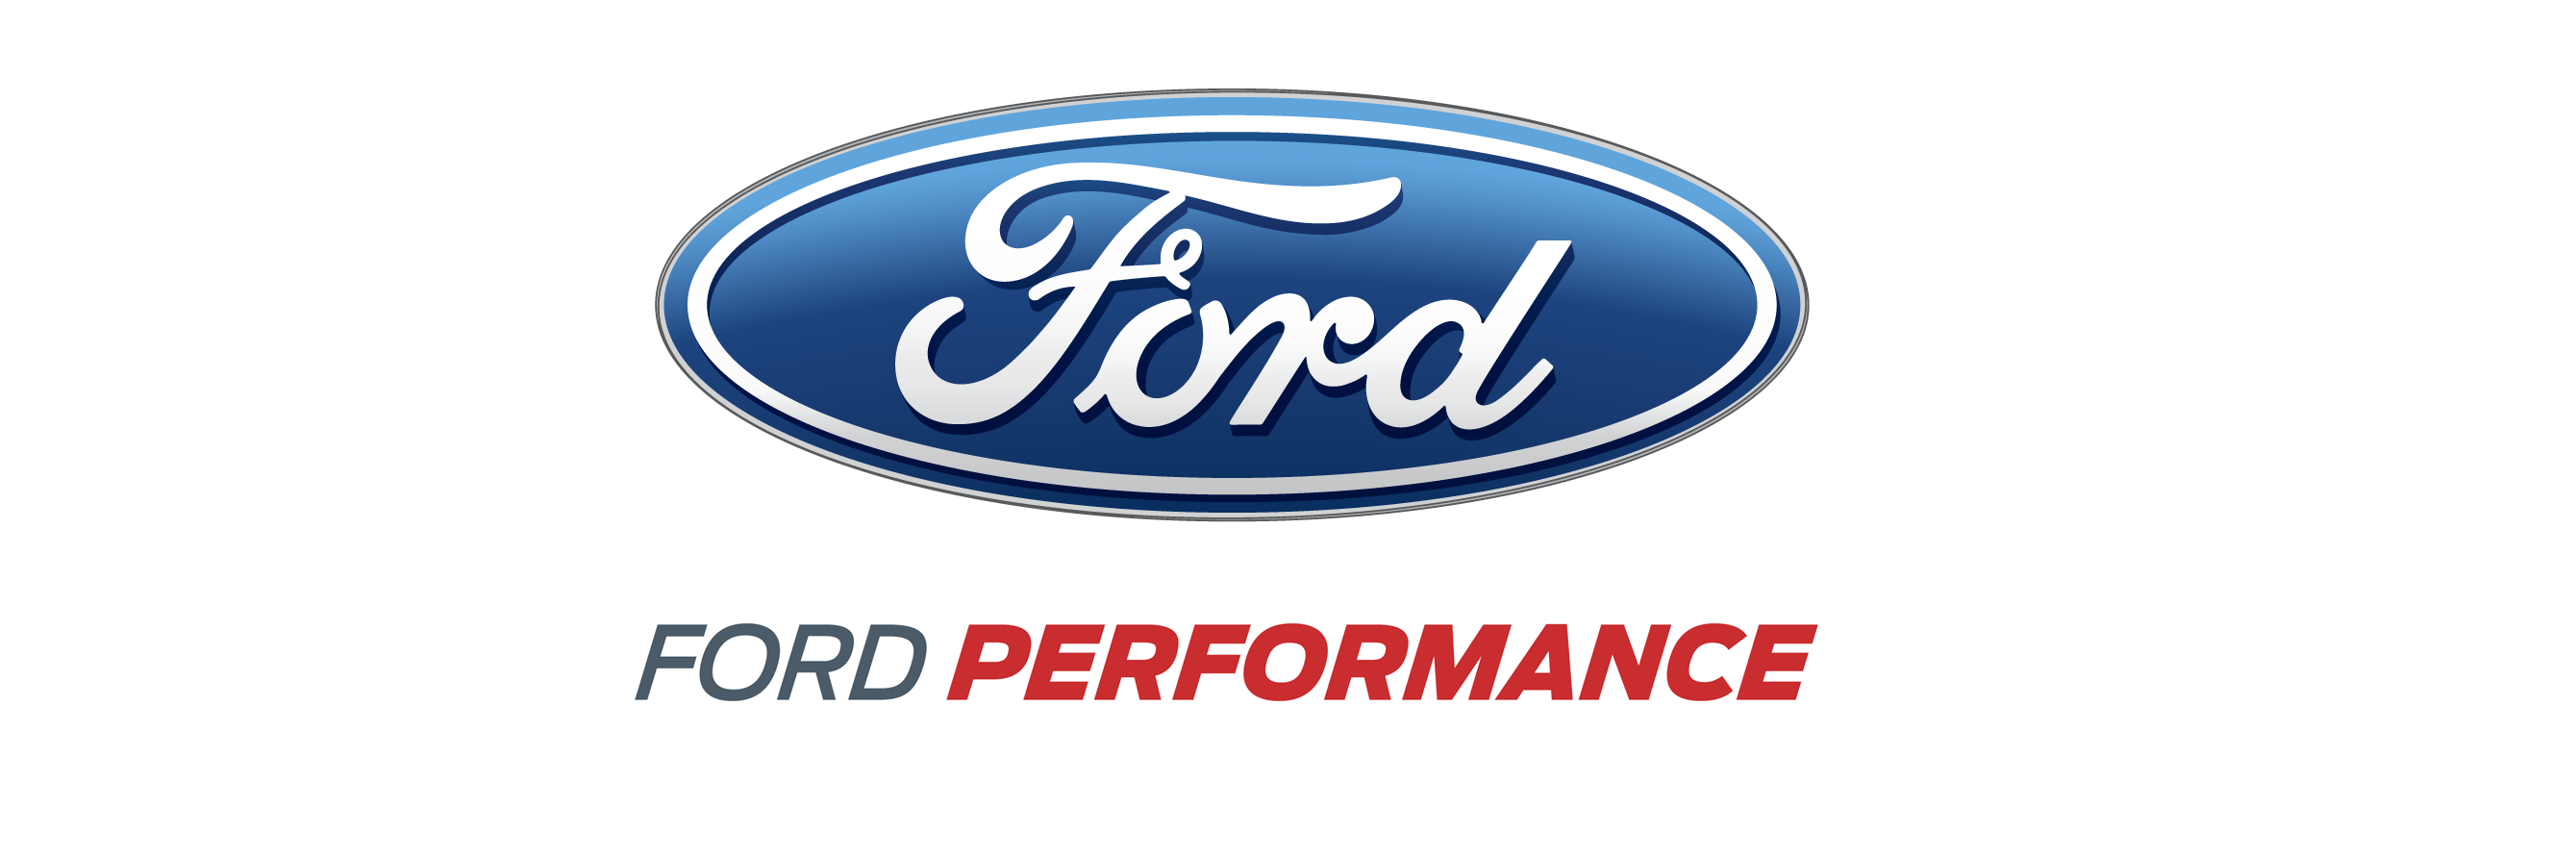 Ford Performance NASCAR: Greg Zipadelli Media Availability Transcript ...